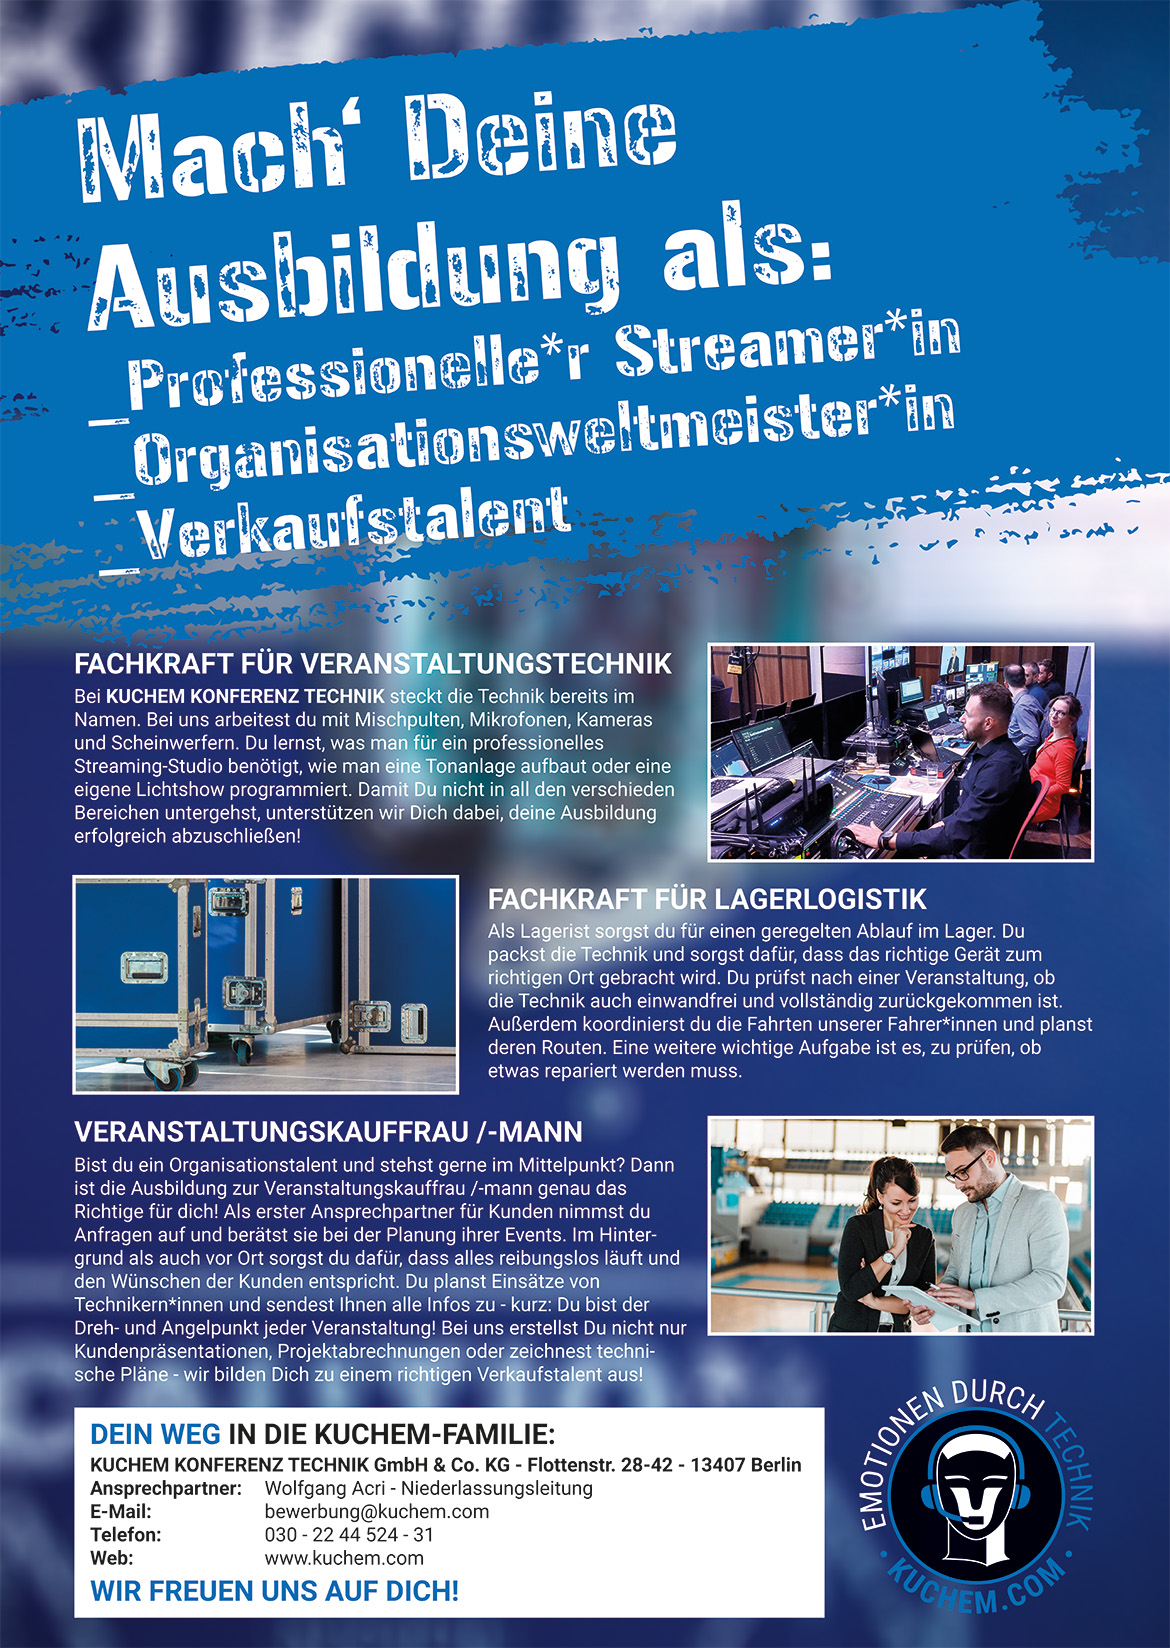 Ausbildungsplakat: Kuchem Konferenz Technik GmbH & Co. KG